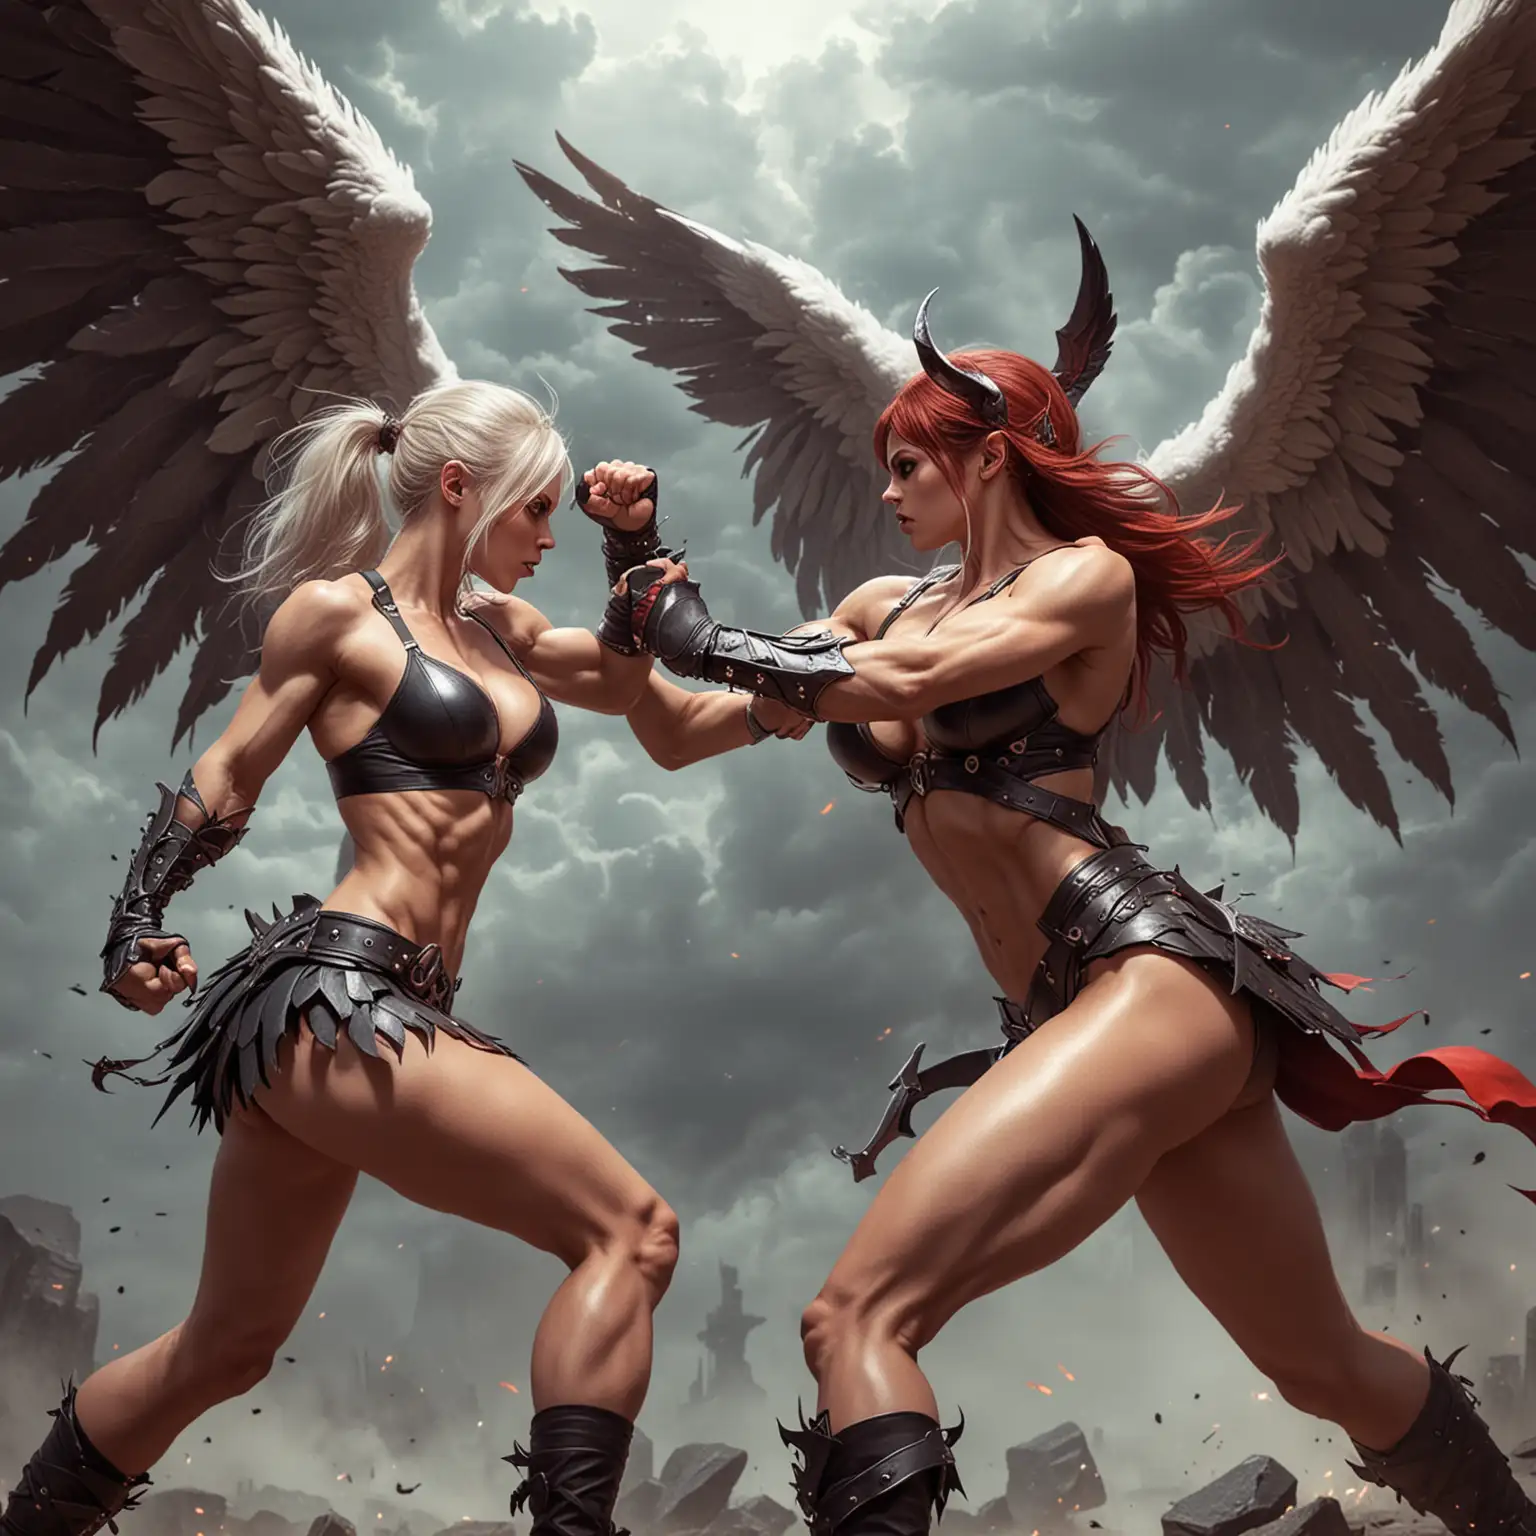 Epic Battle Between Muscular Demon Girl and Muscular Angel Girl